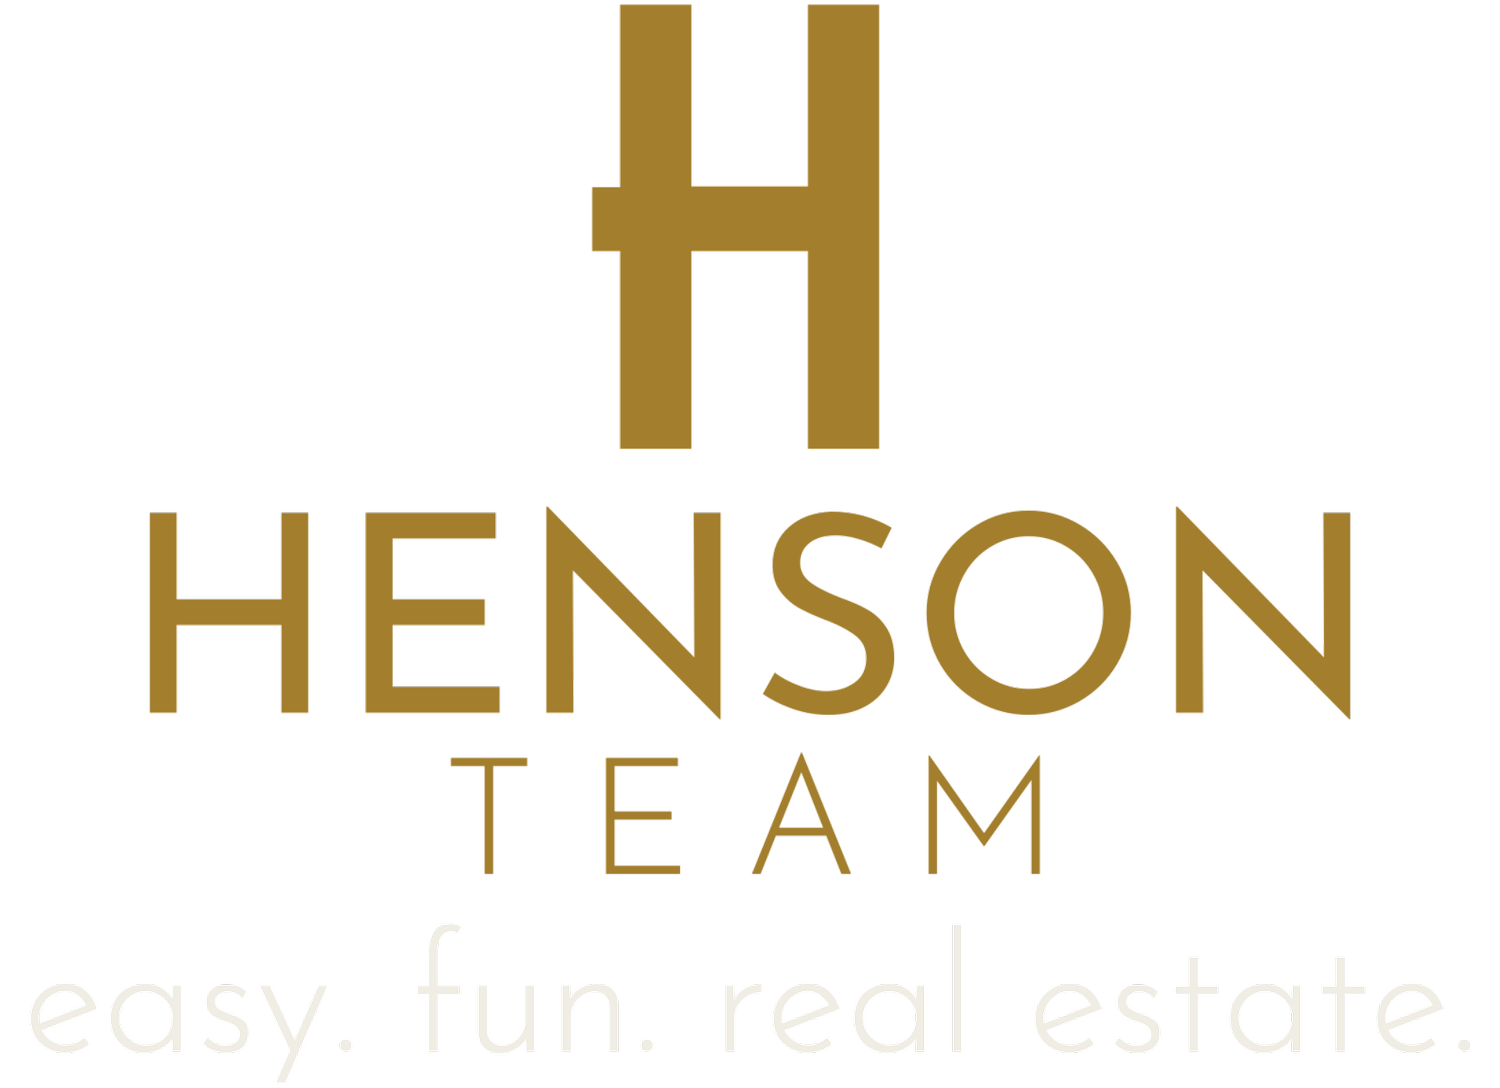 The Henson Team